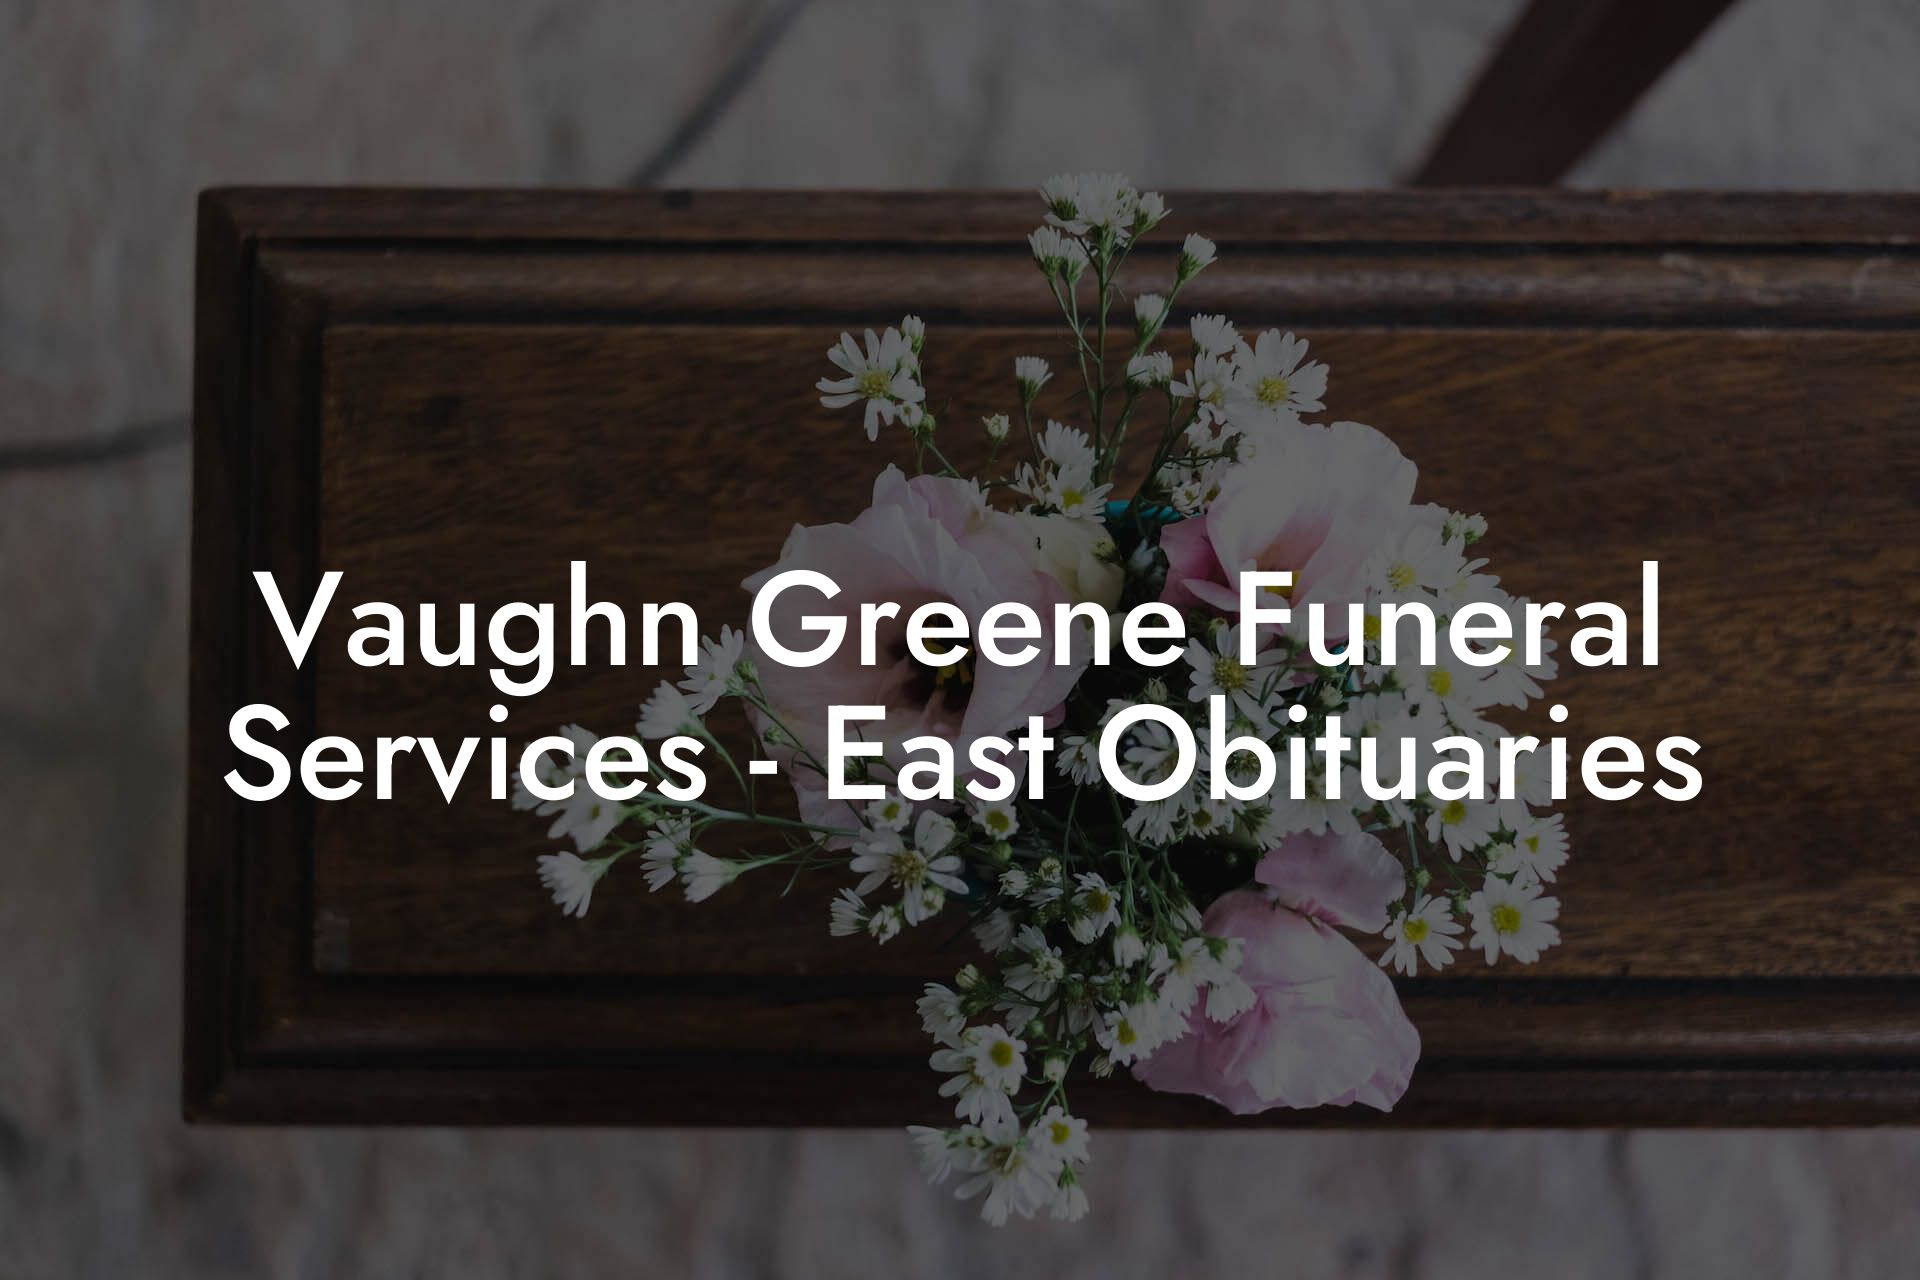 Vaughn Greene Funeral Services - East Obituaries